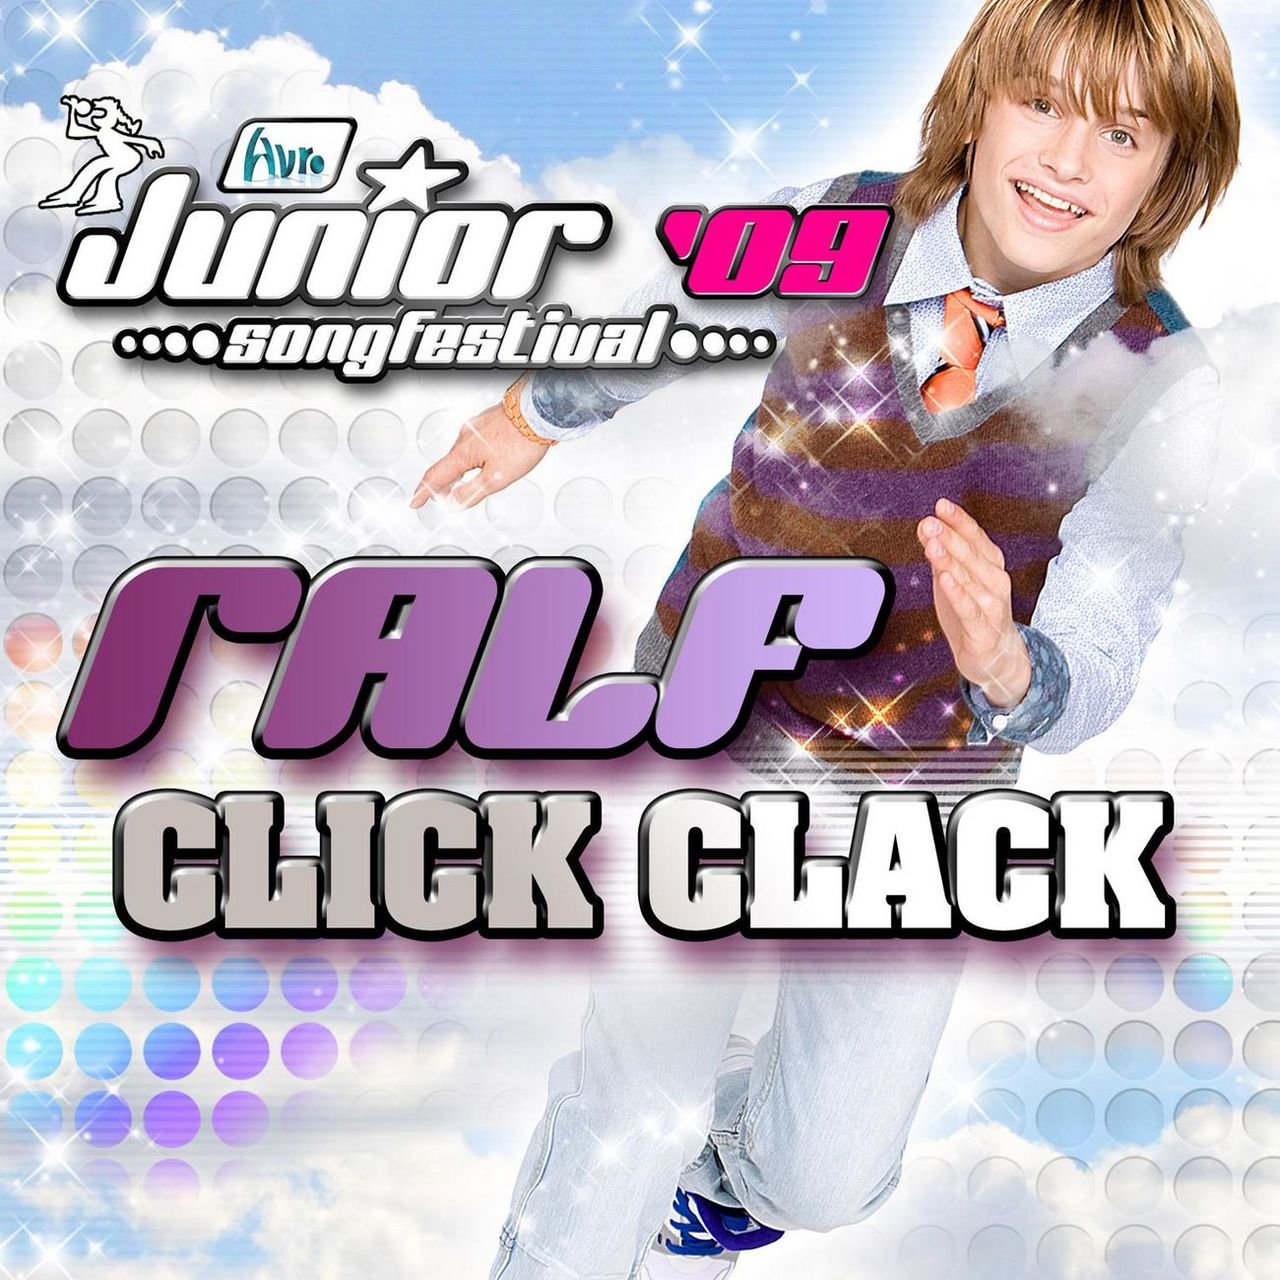 Ralf Mackenbach Click Clack cover artwork